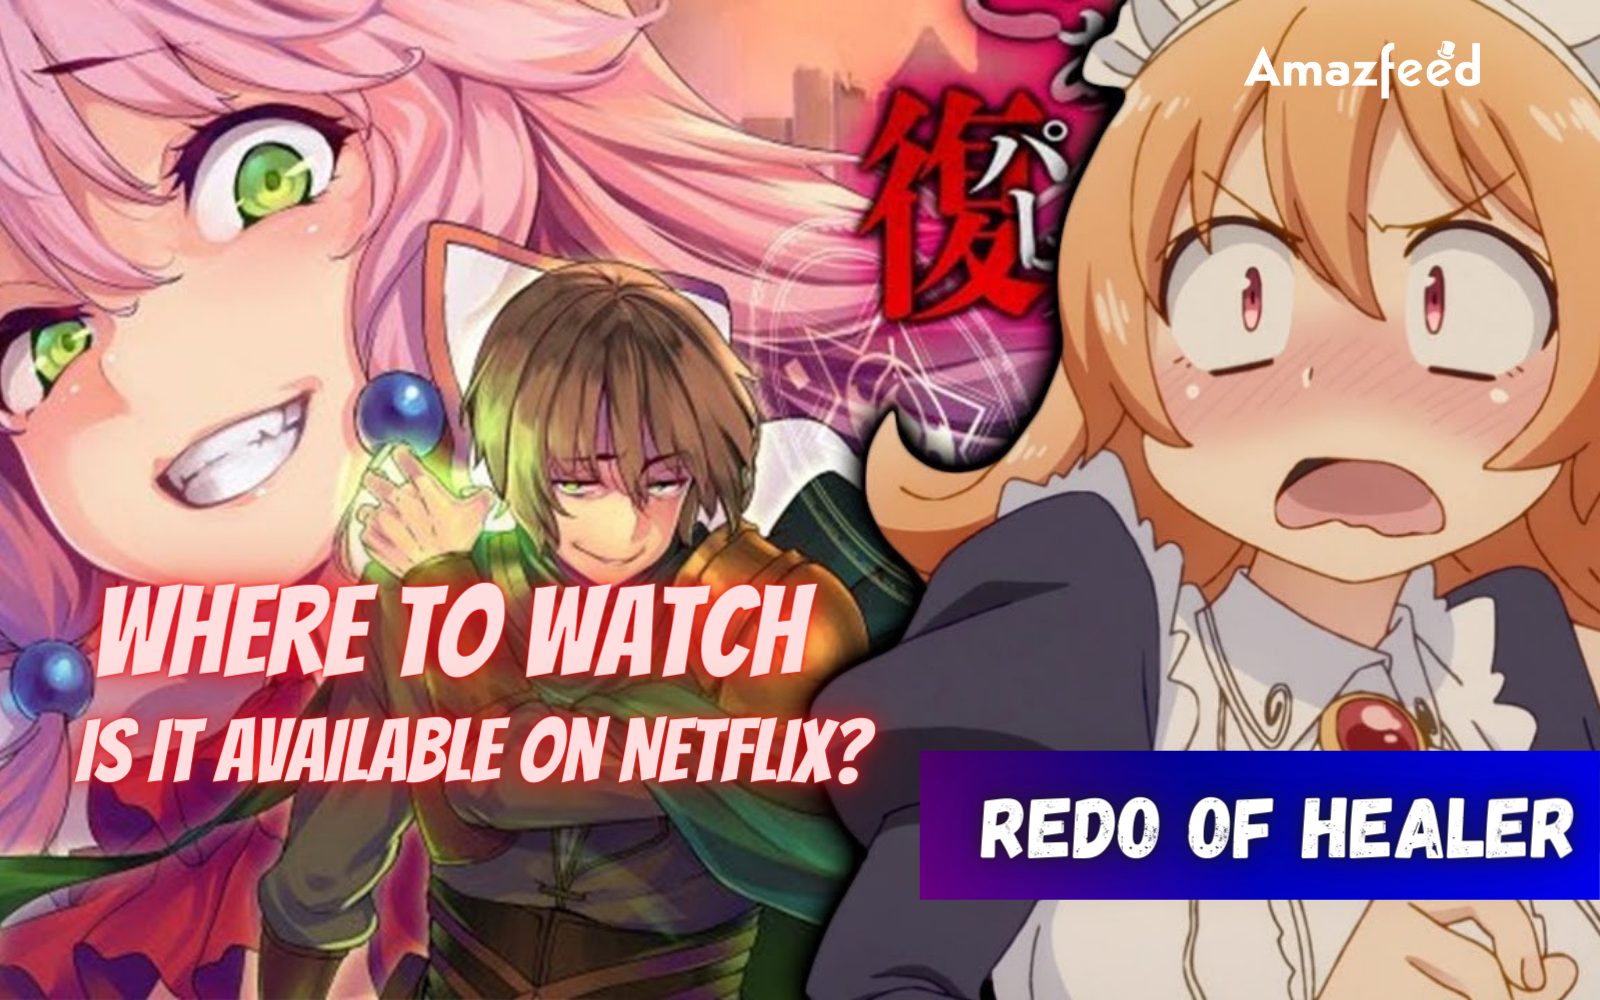 Watch Redo of Healer season 1 episode 1 streaming online